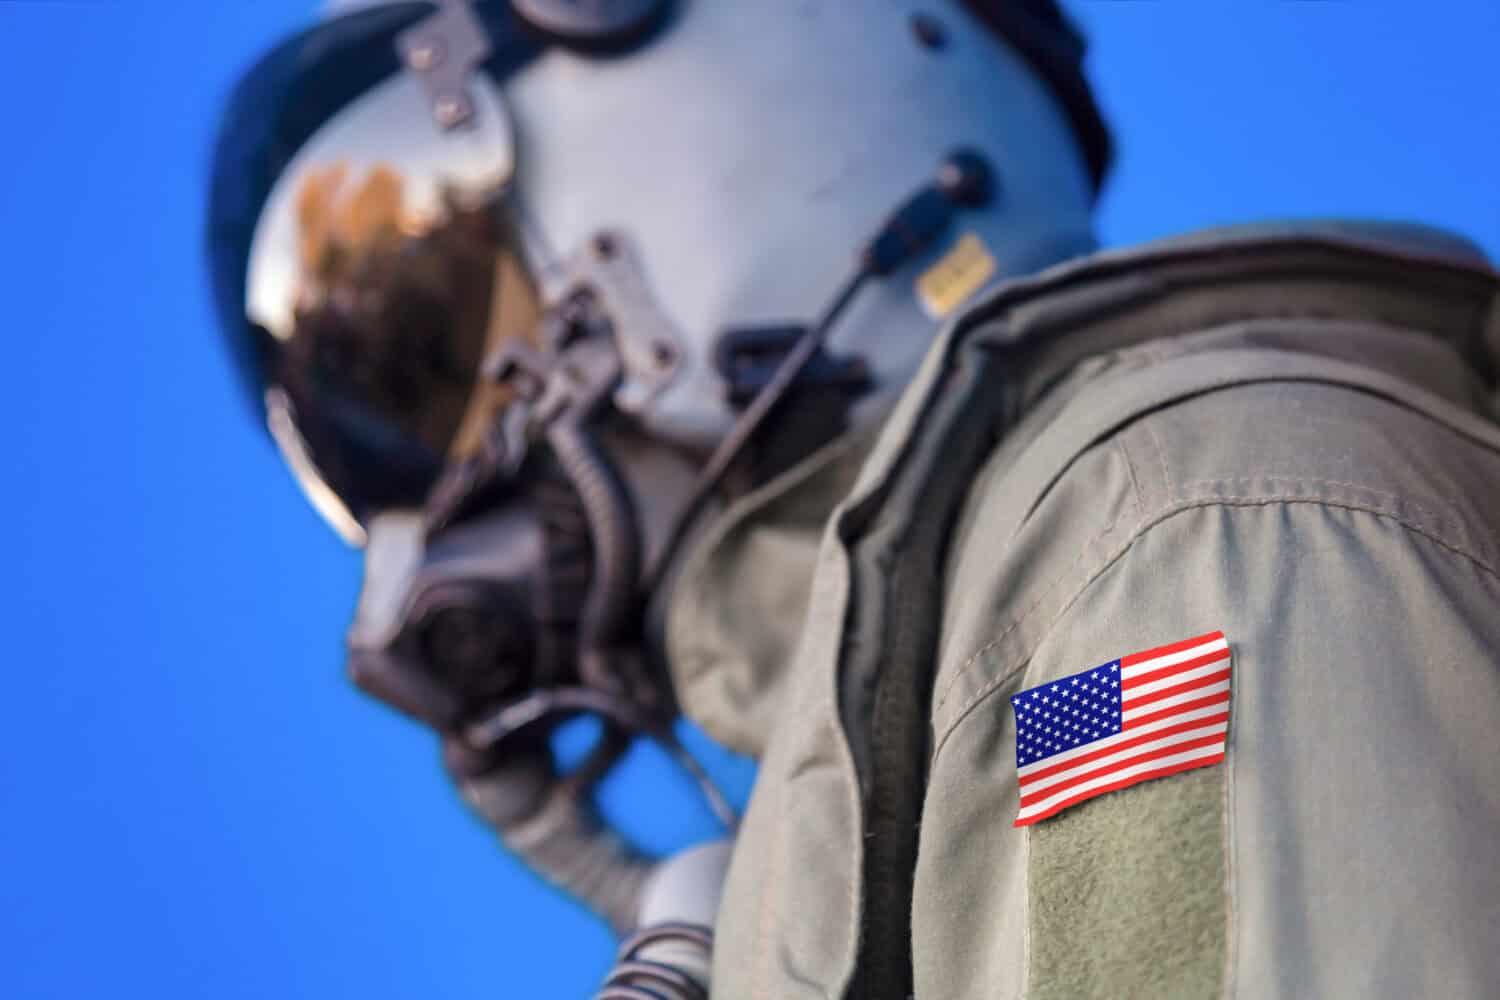 United States jet aircraft pilot flight suit uniform with American flag patch.